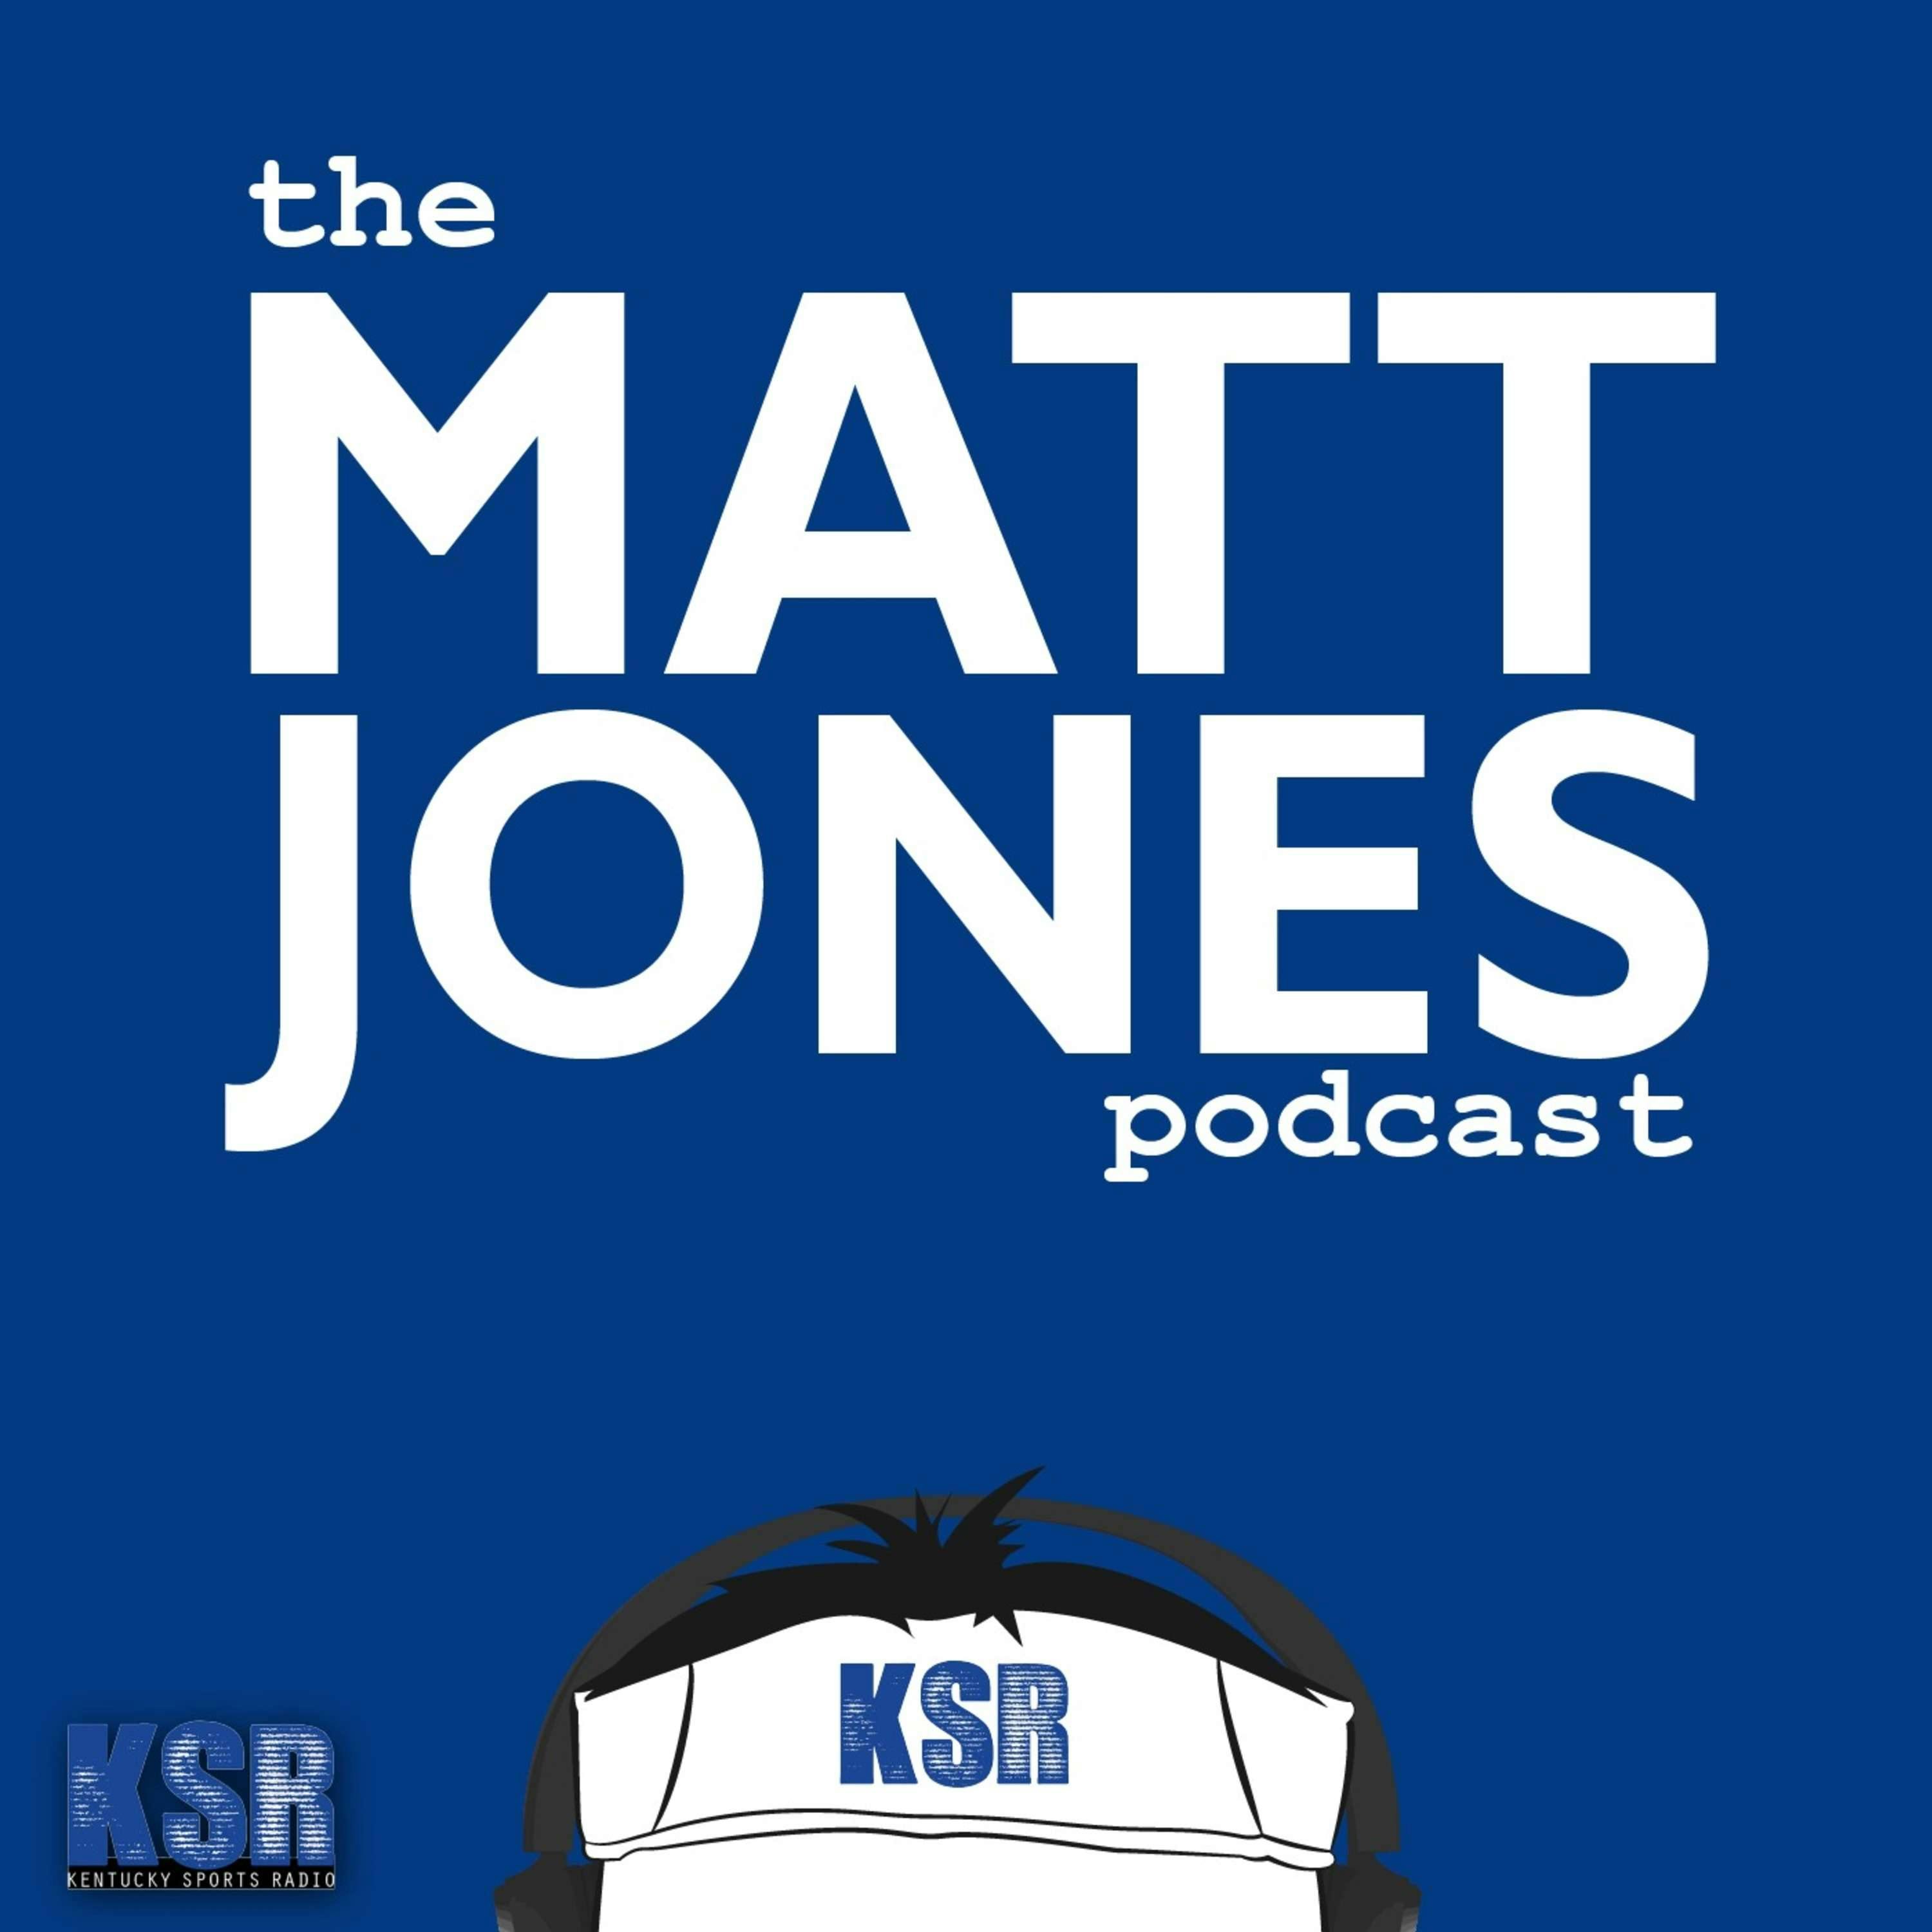 The Matt Jones Podcast: E45 Muhammad Ali’s Life with Dave Kindred